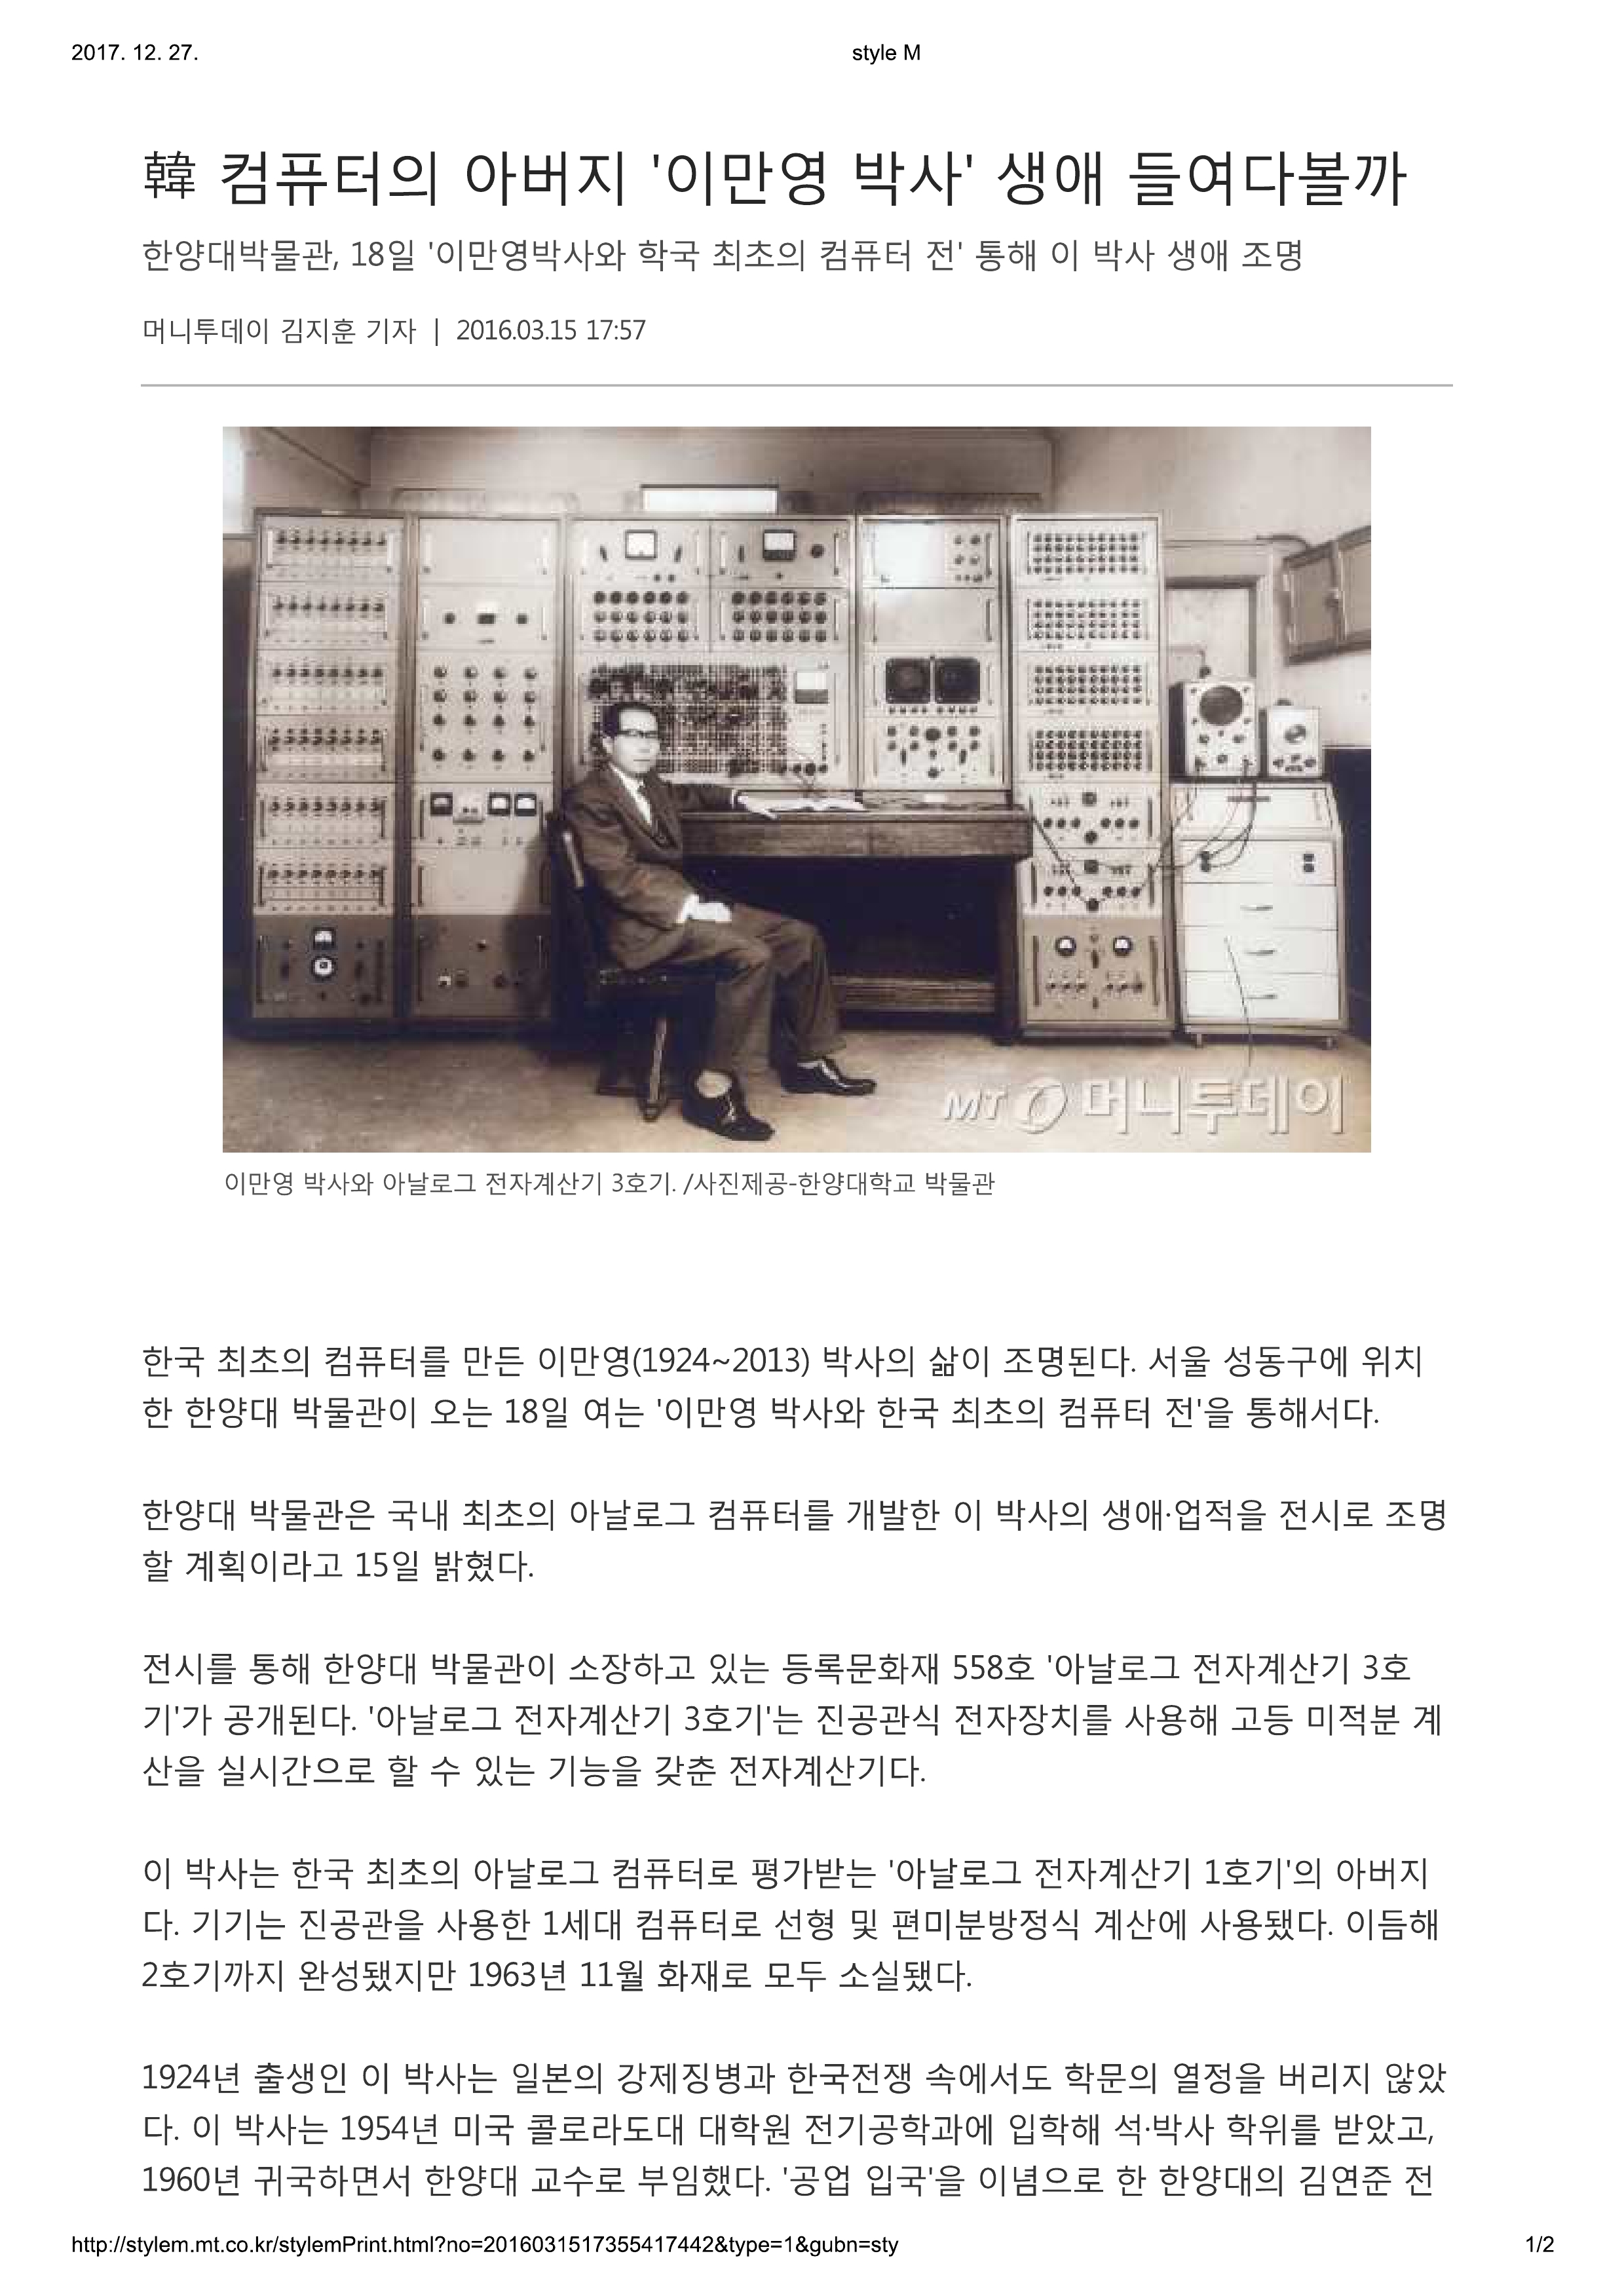 20160315_styleM_韓 컴퓨터의 아버지 '이만영 박사' 생애 들여다볼까-1.jpg